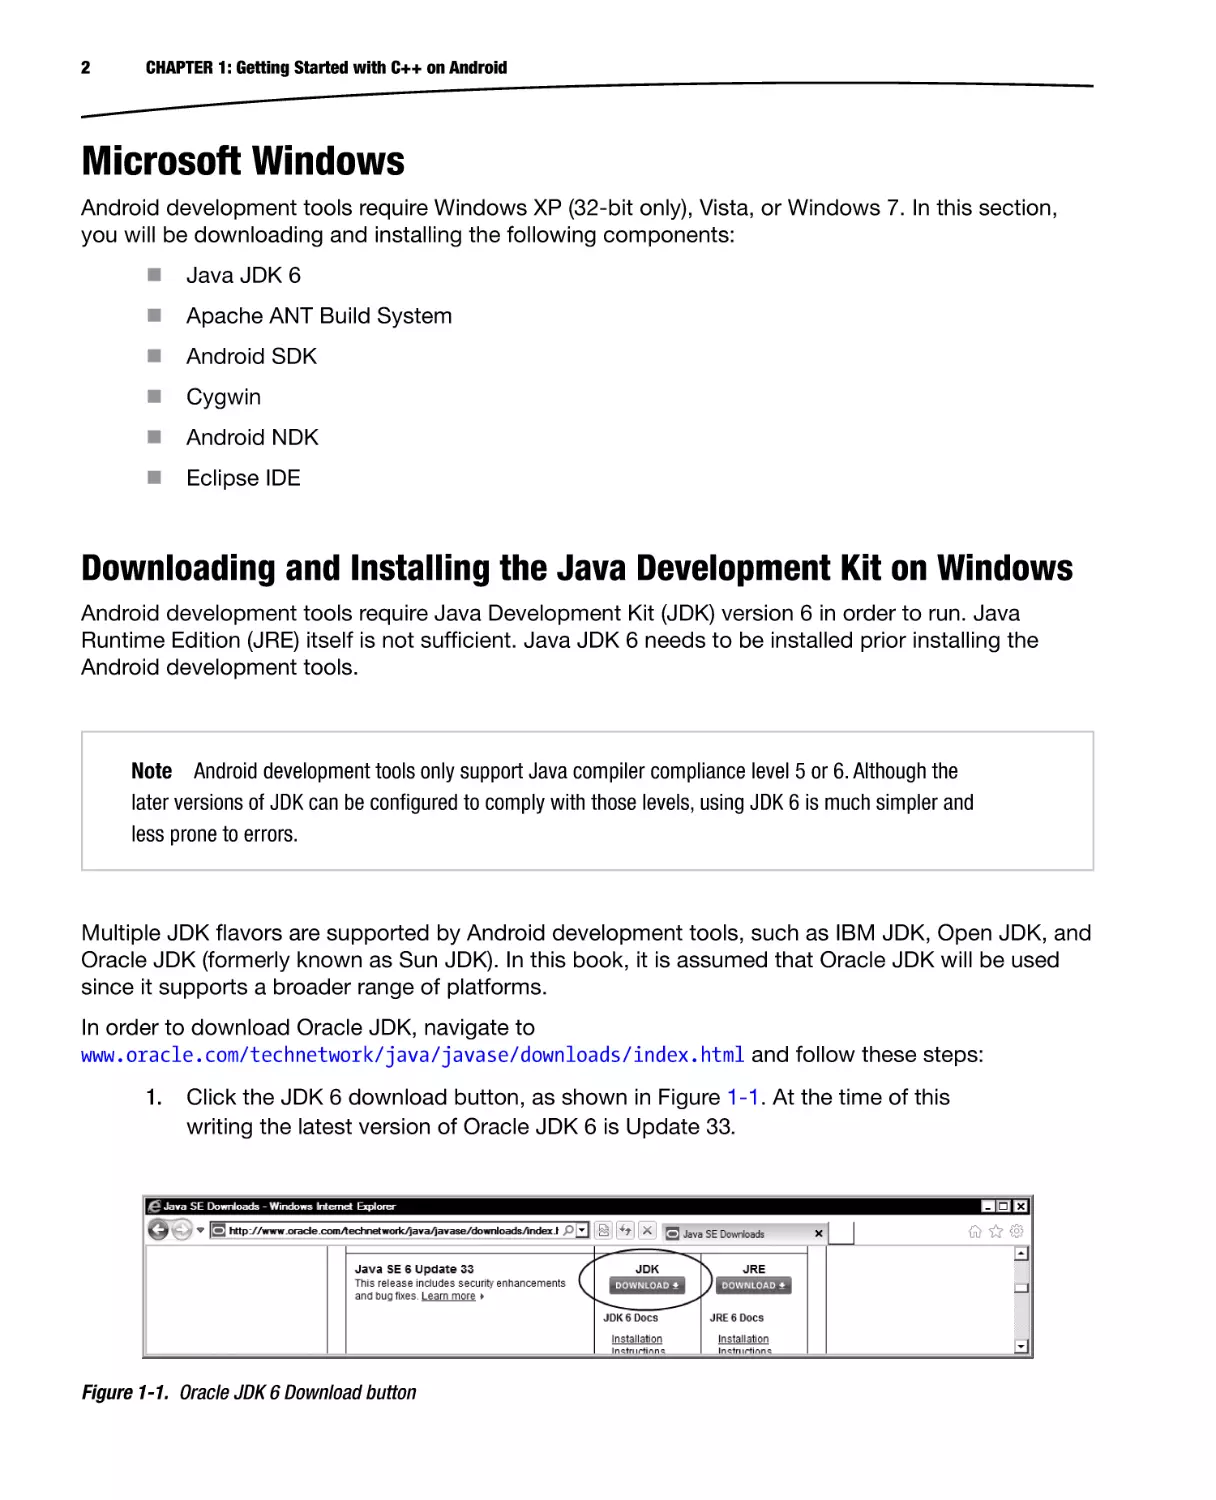 Microsoft Windows
Downloading and Installing the Java Development Kit on Windows